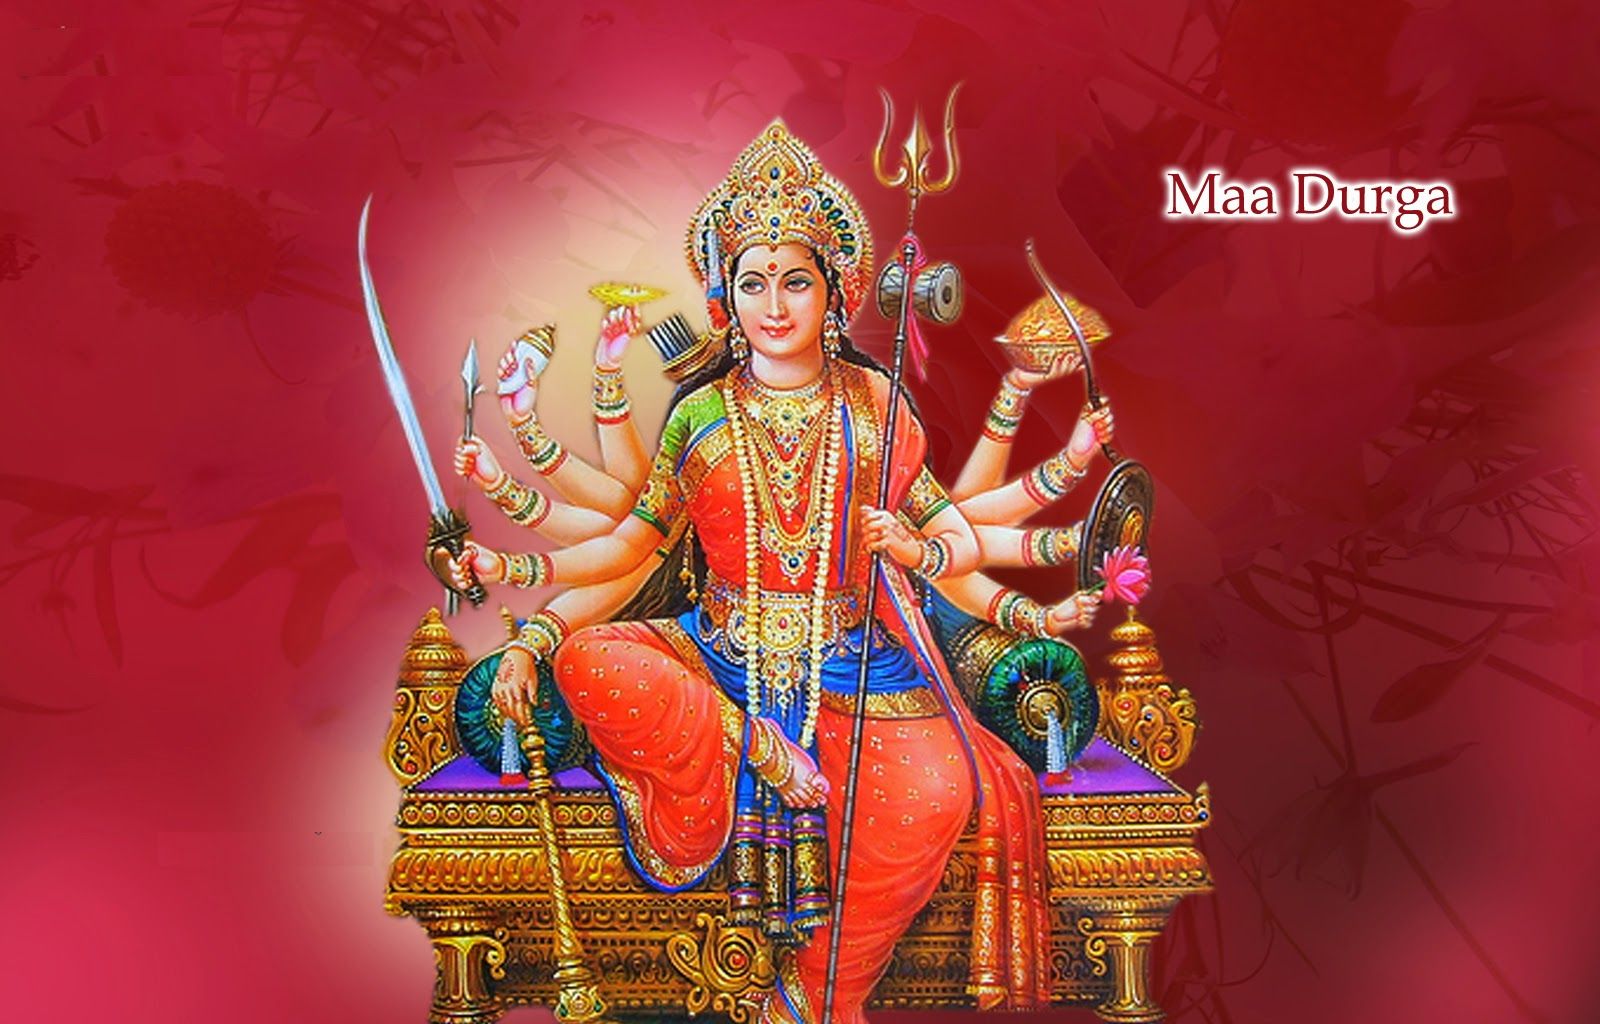 Maa Durga Goddess image picture gallery -wallpaper.net